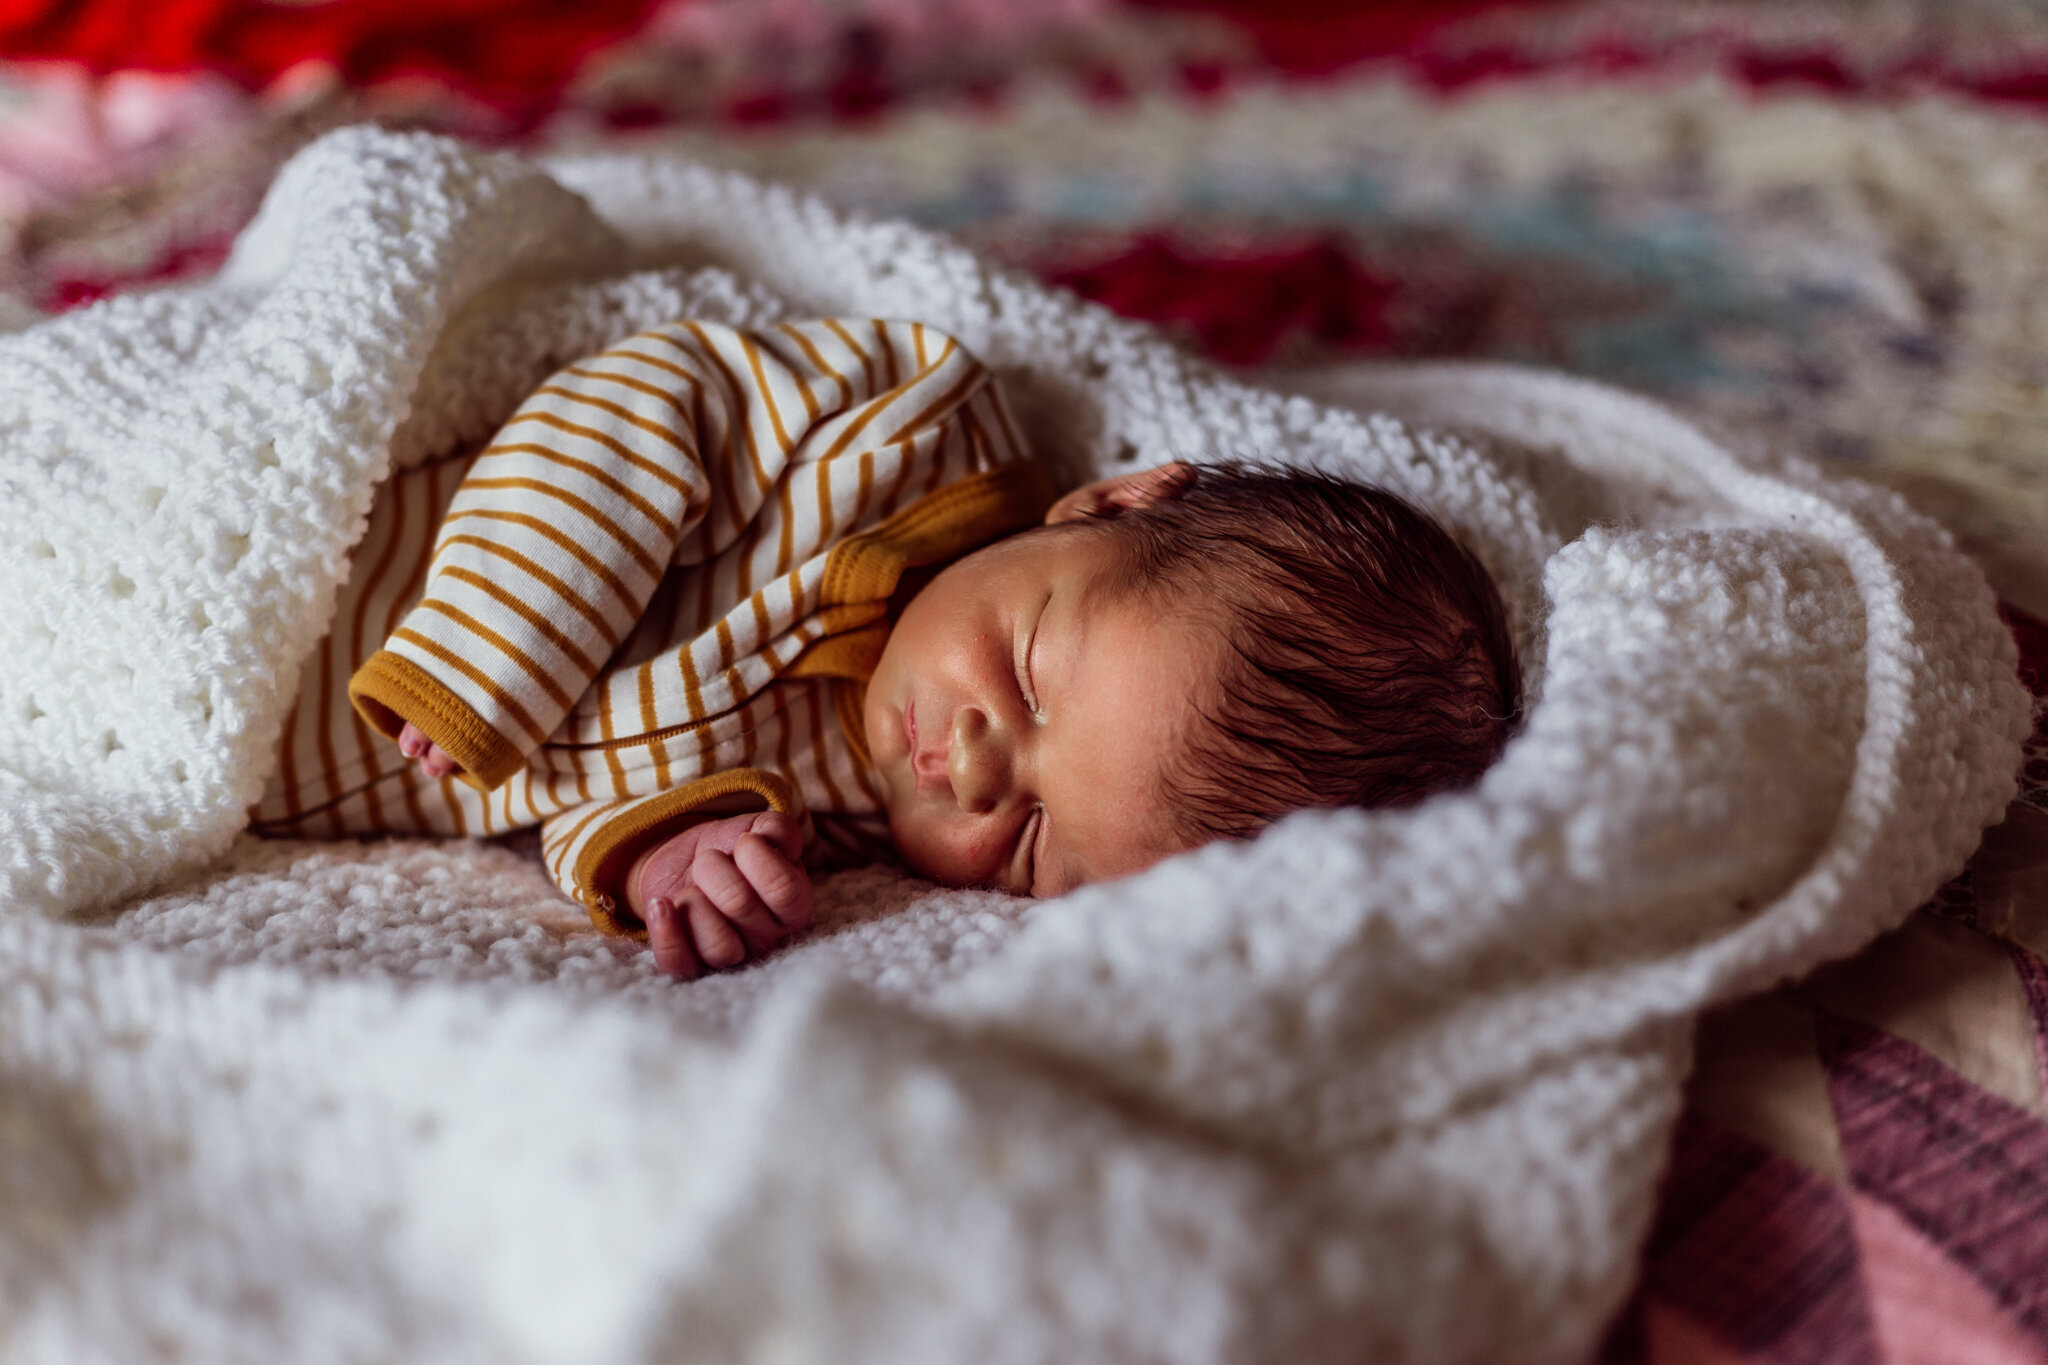 central-virginia-newborn-photography-7640.jpg